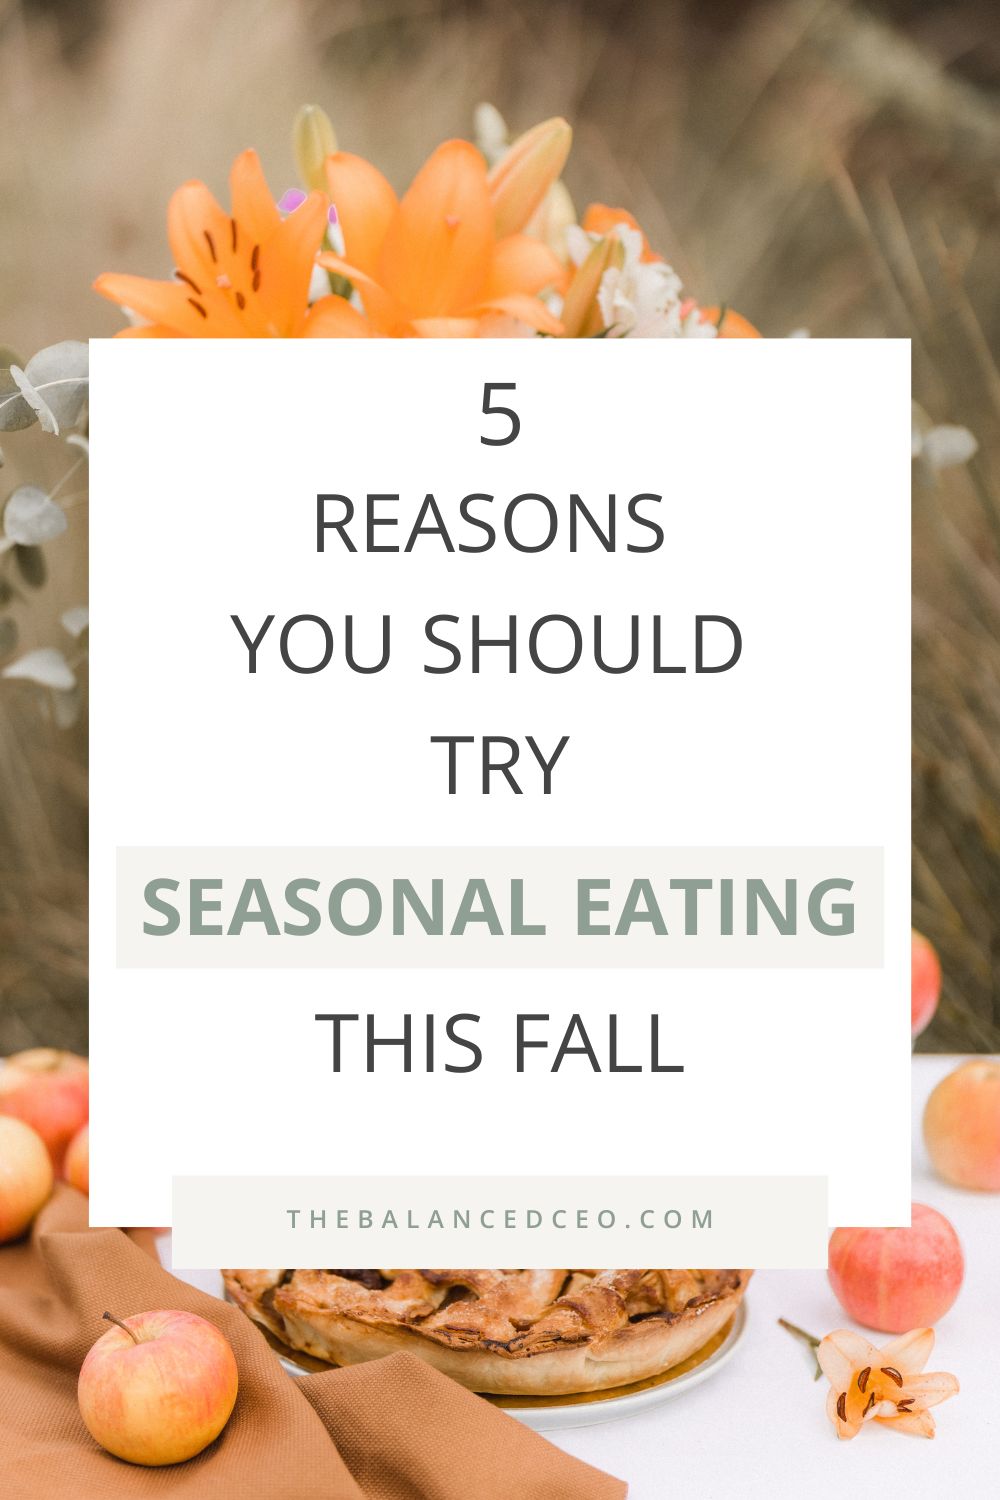 5 Reasons You Should Try Seasonal Eating This Fall